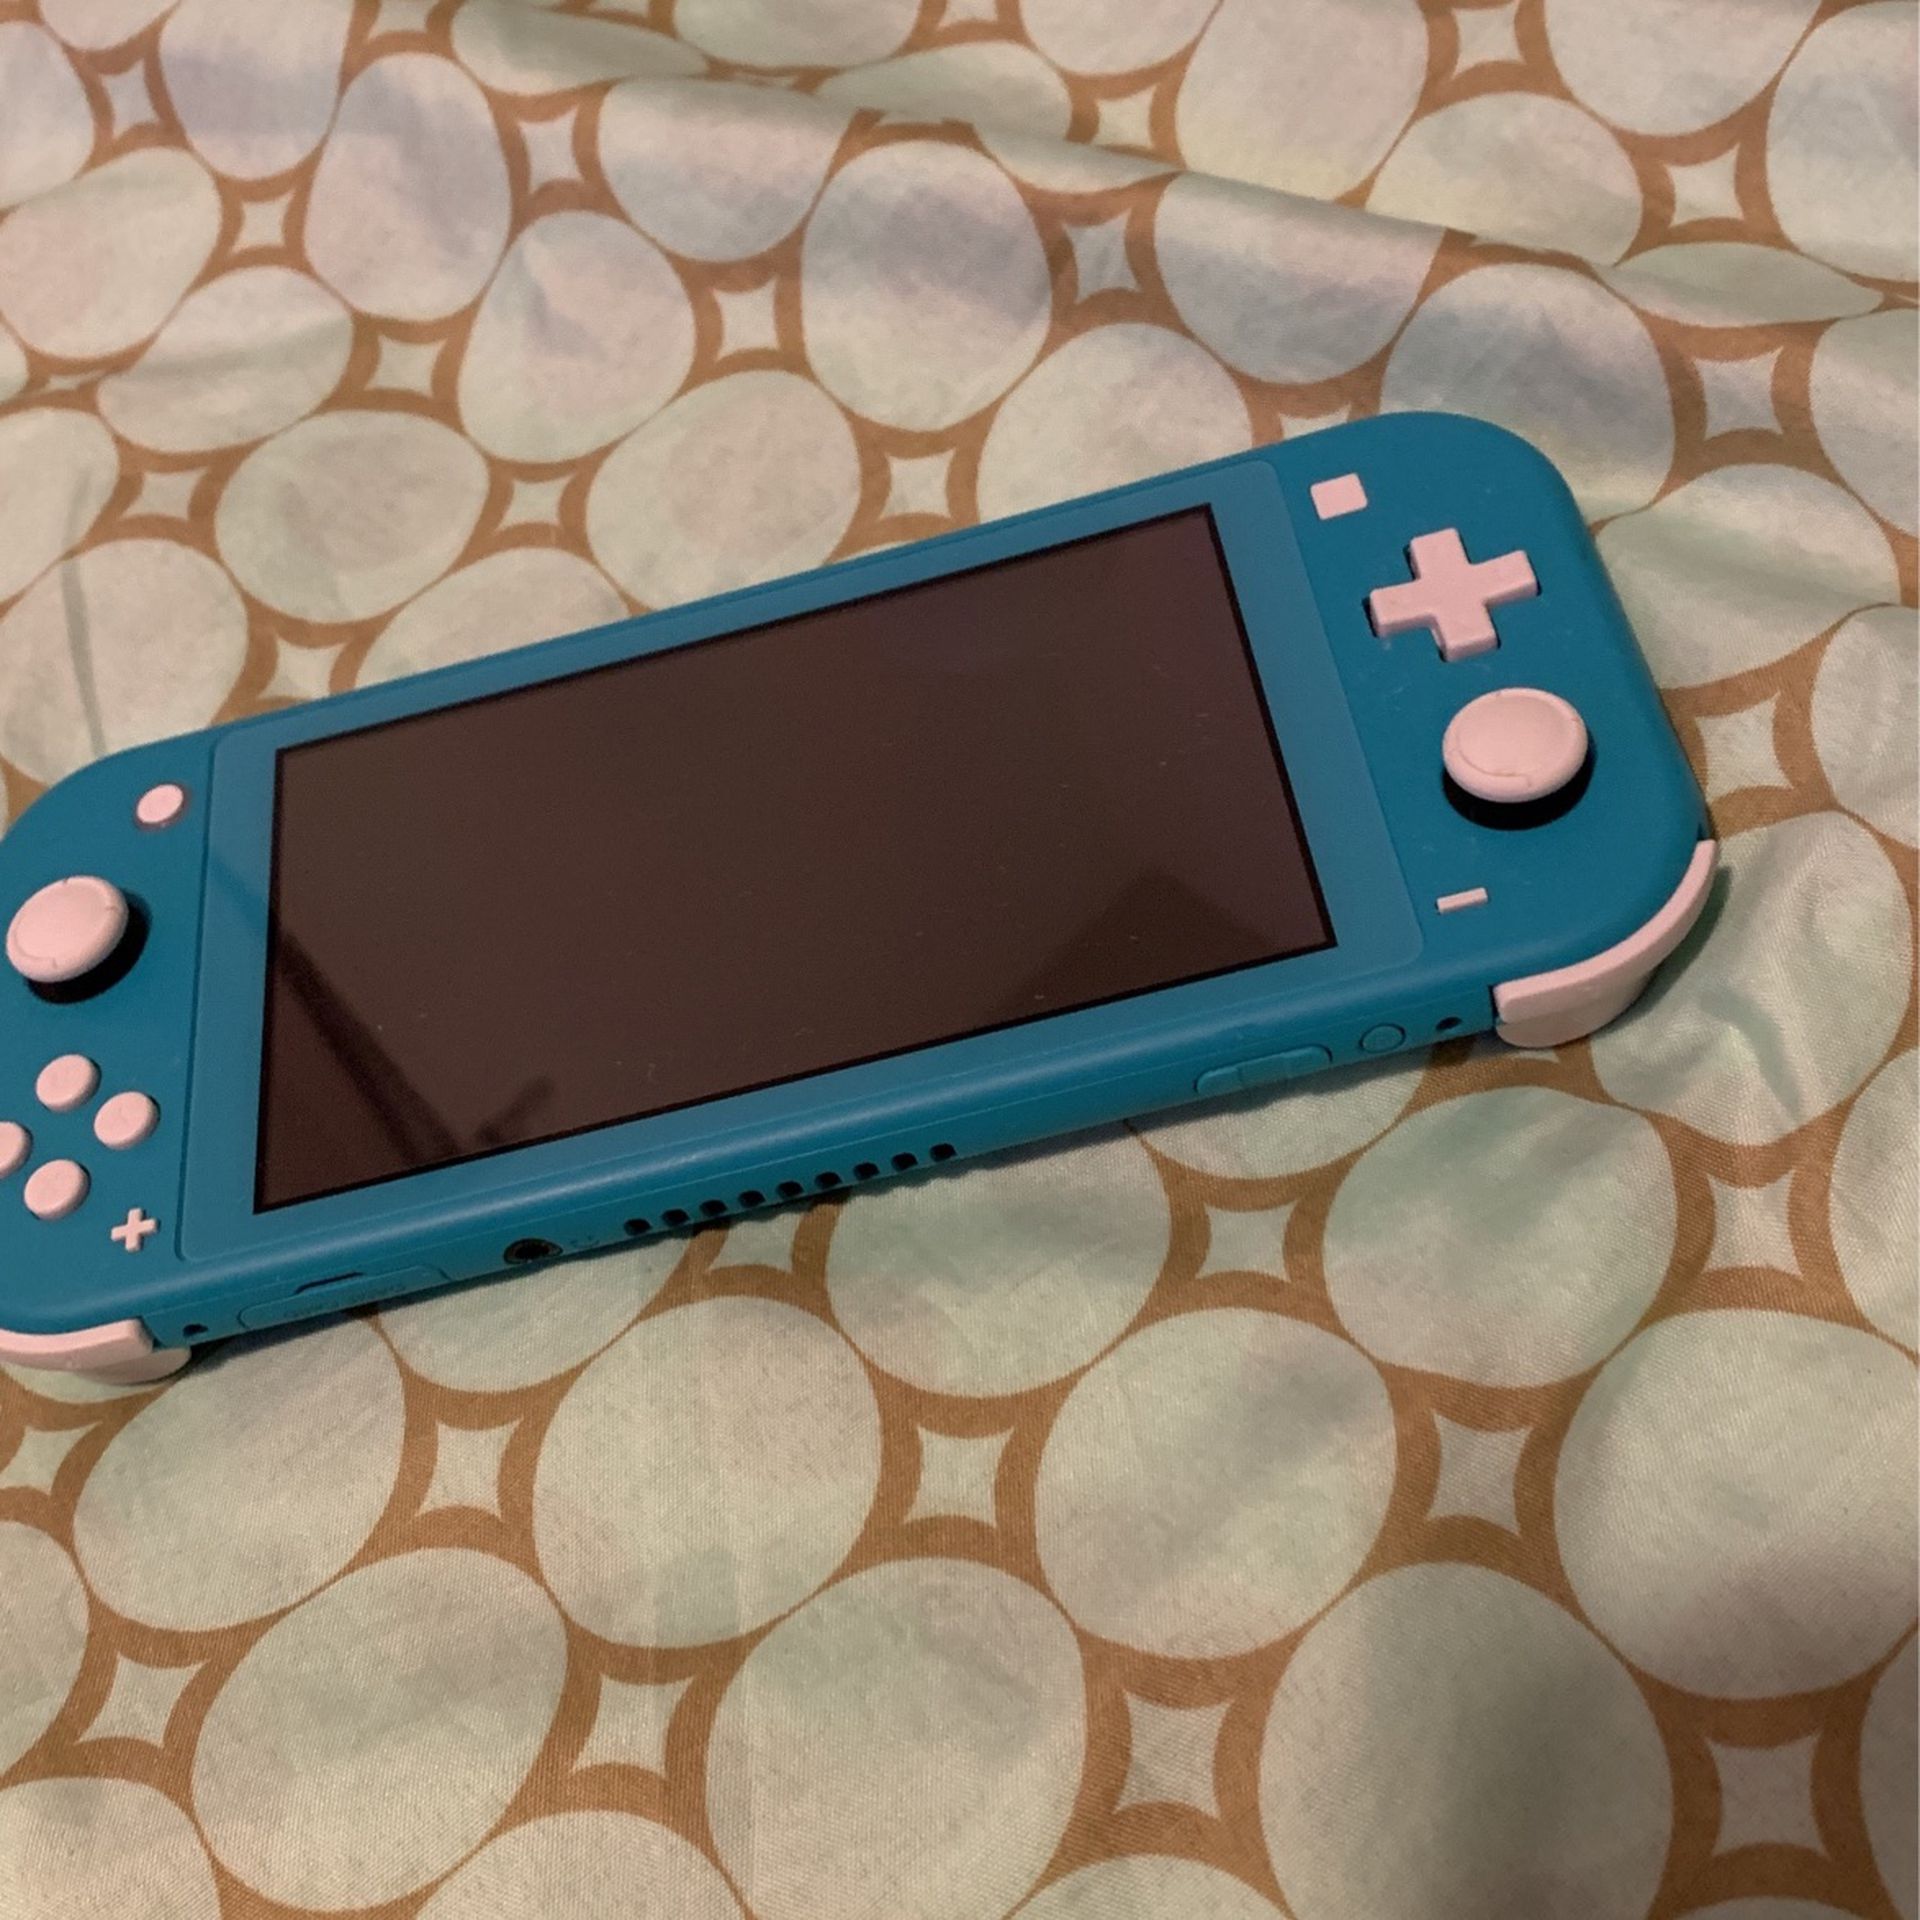 Nintendo Switch Blue